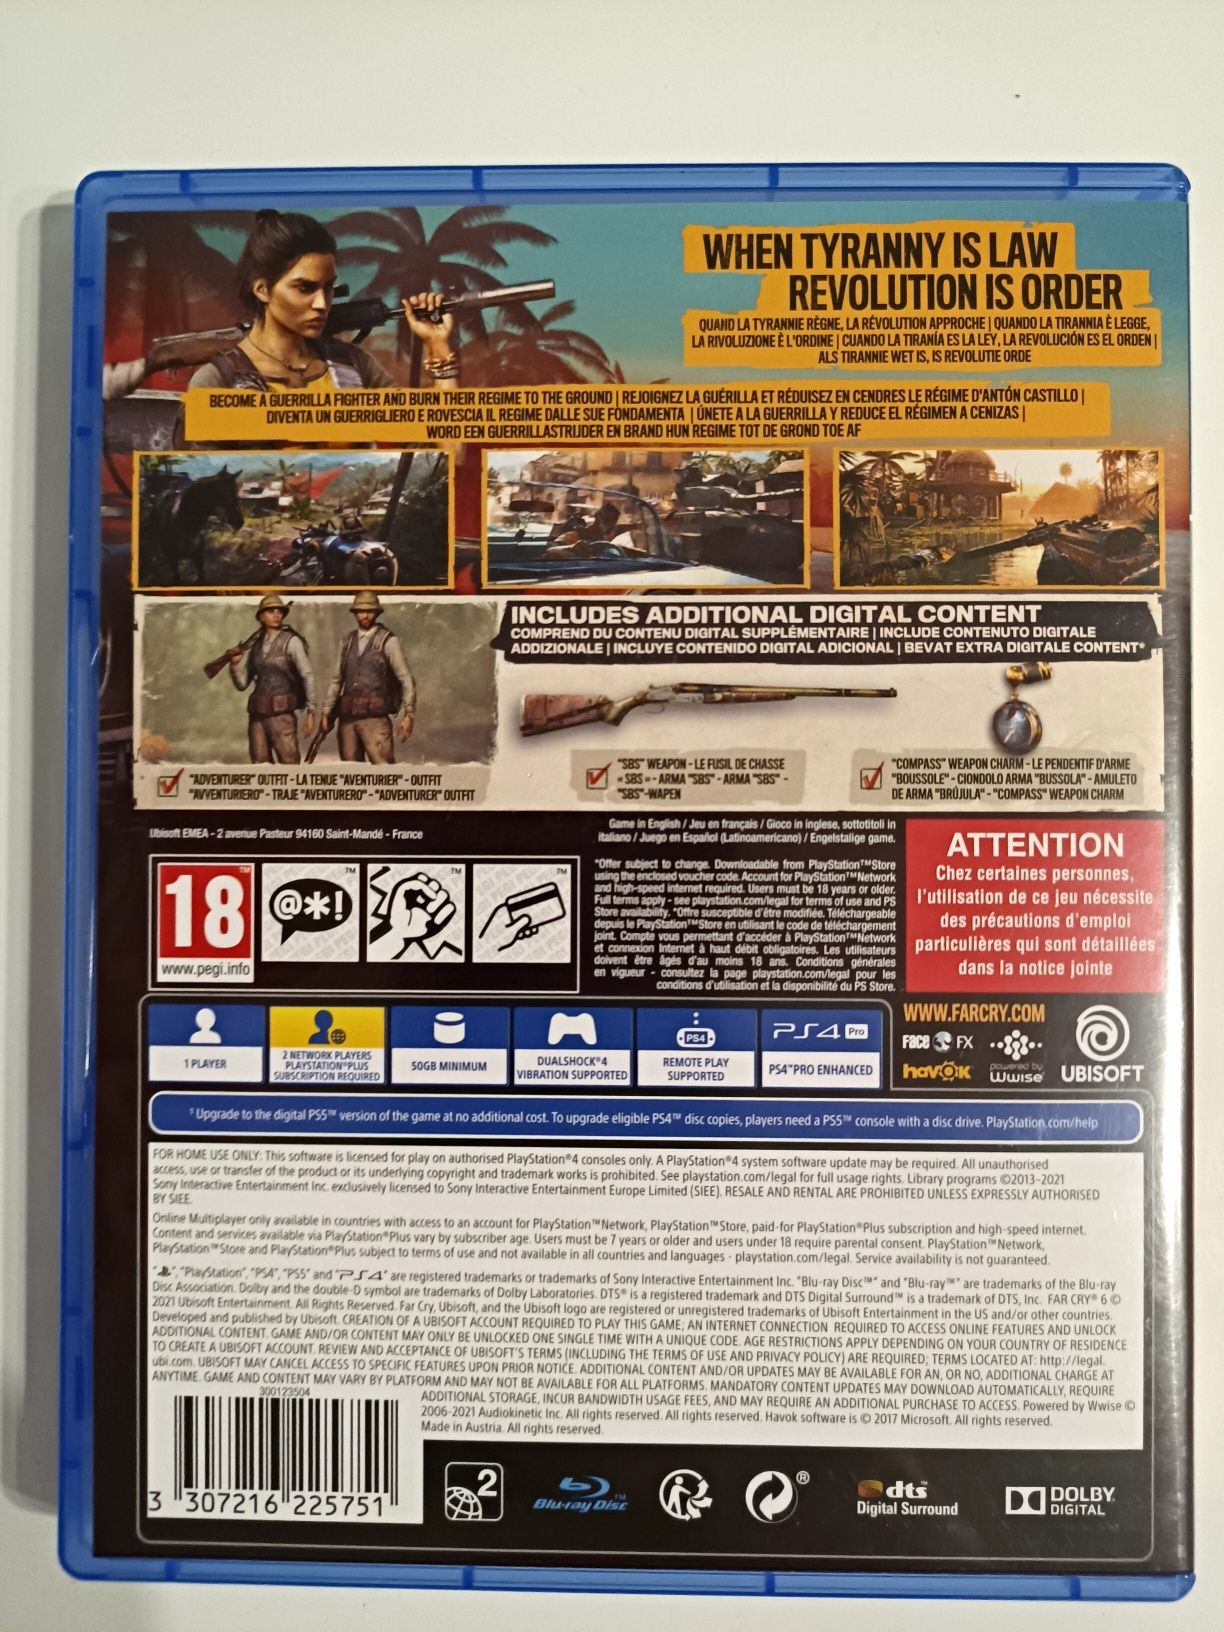 Ps4 Far Cry 6 pl limited edition możliwa zamiana